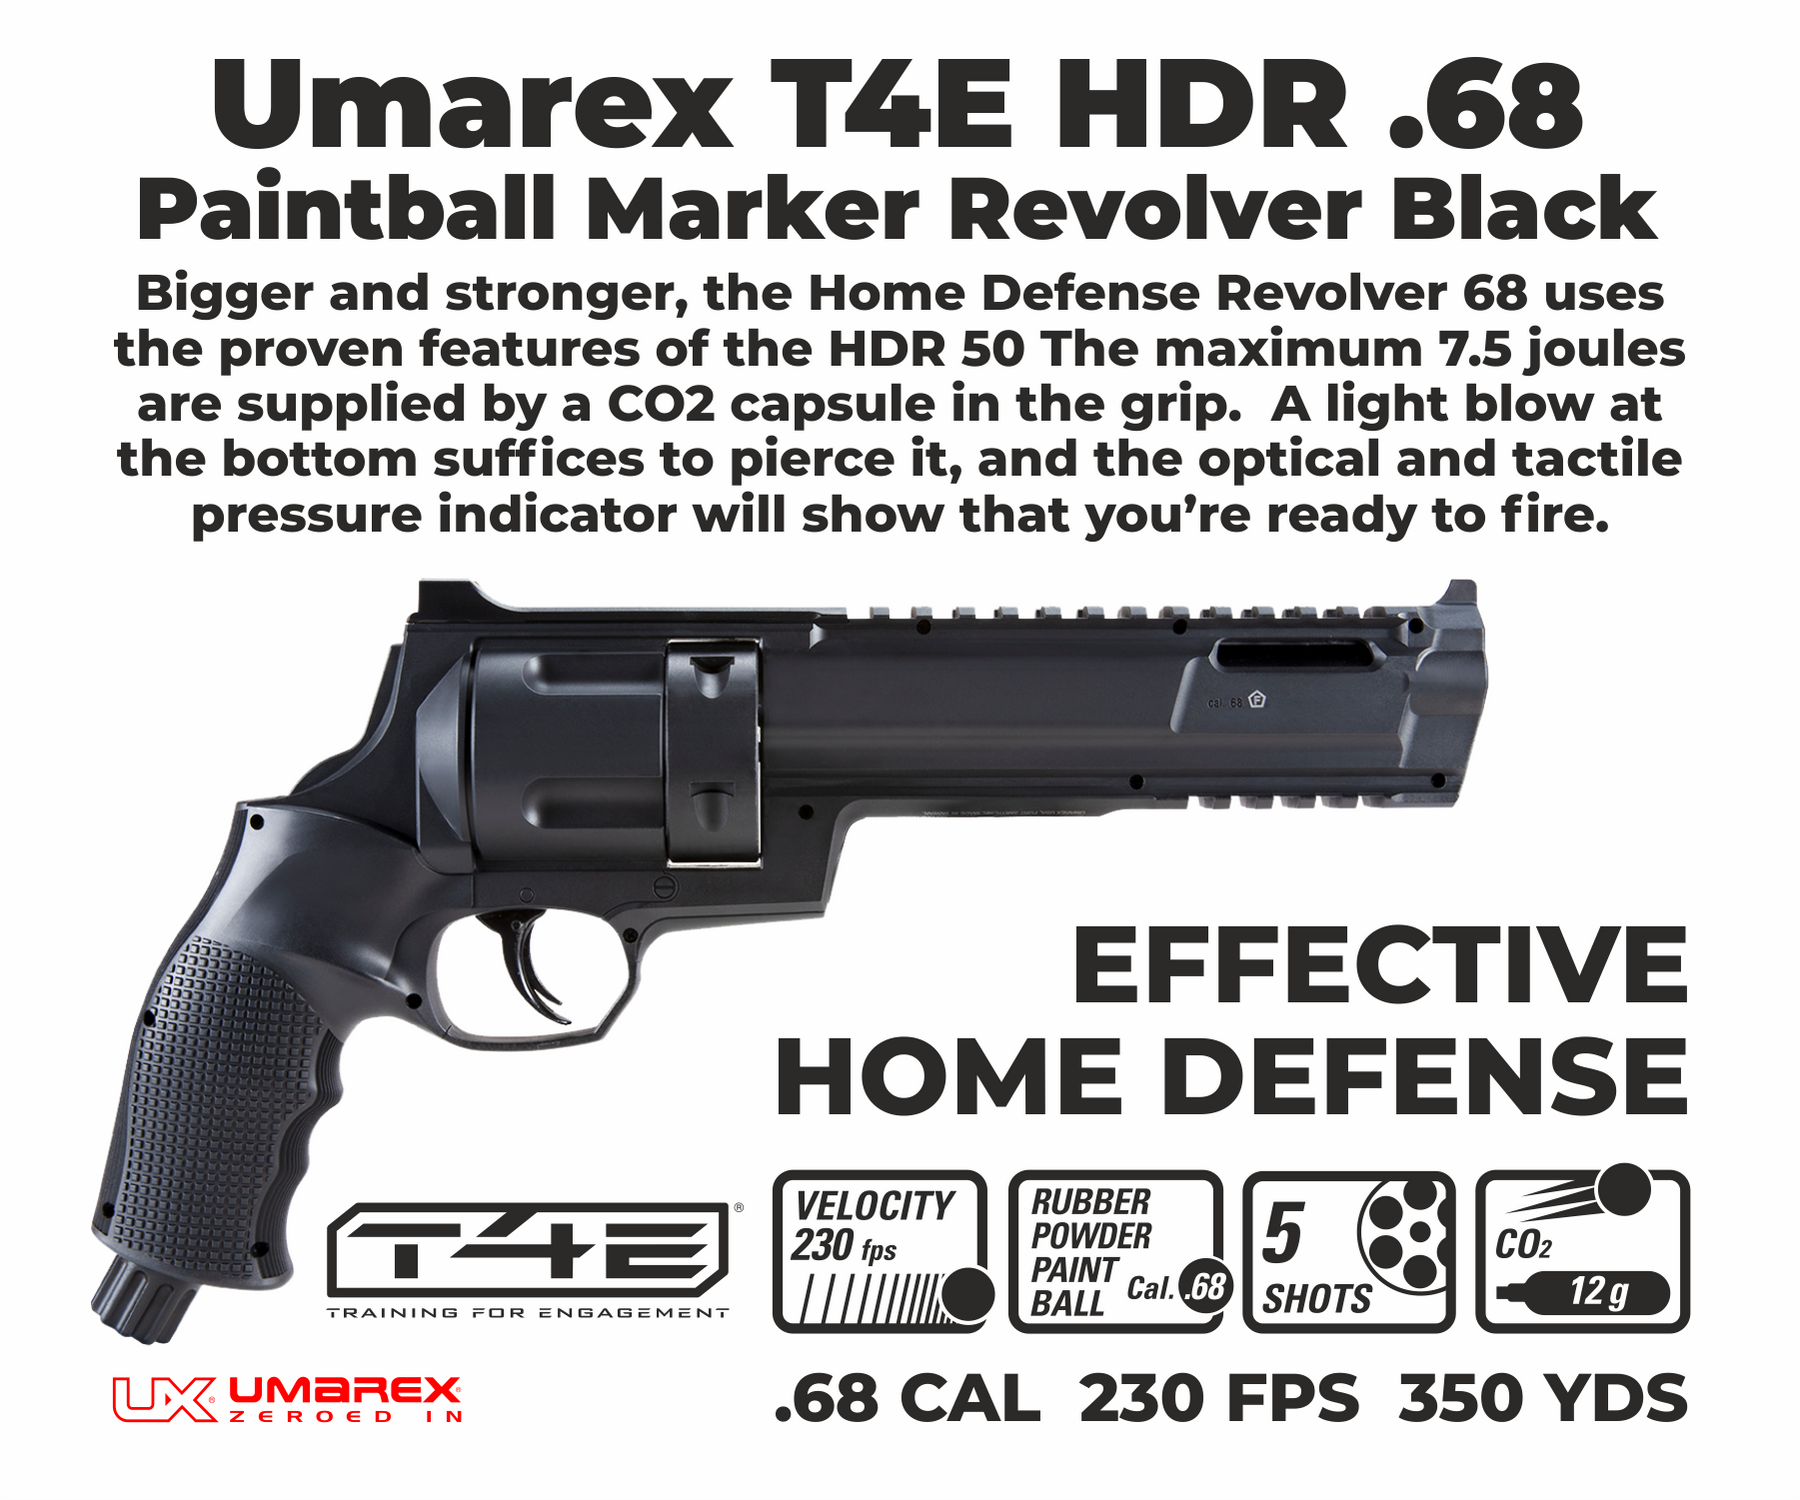 The new UMAREX HDR 68 SELF DEFENSE REVOLVER